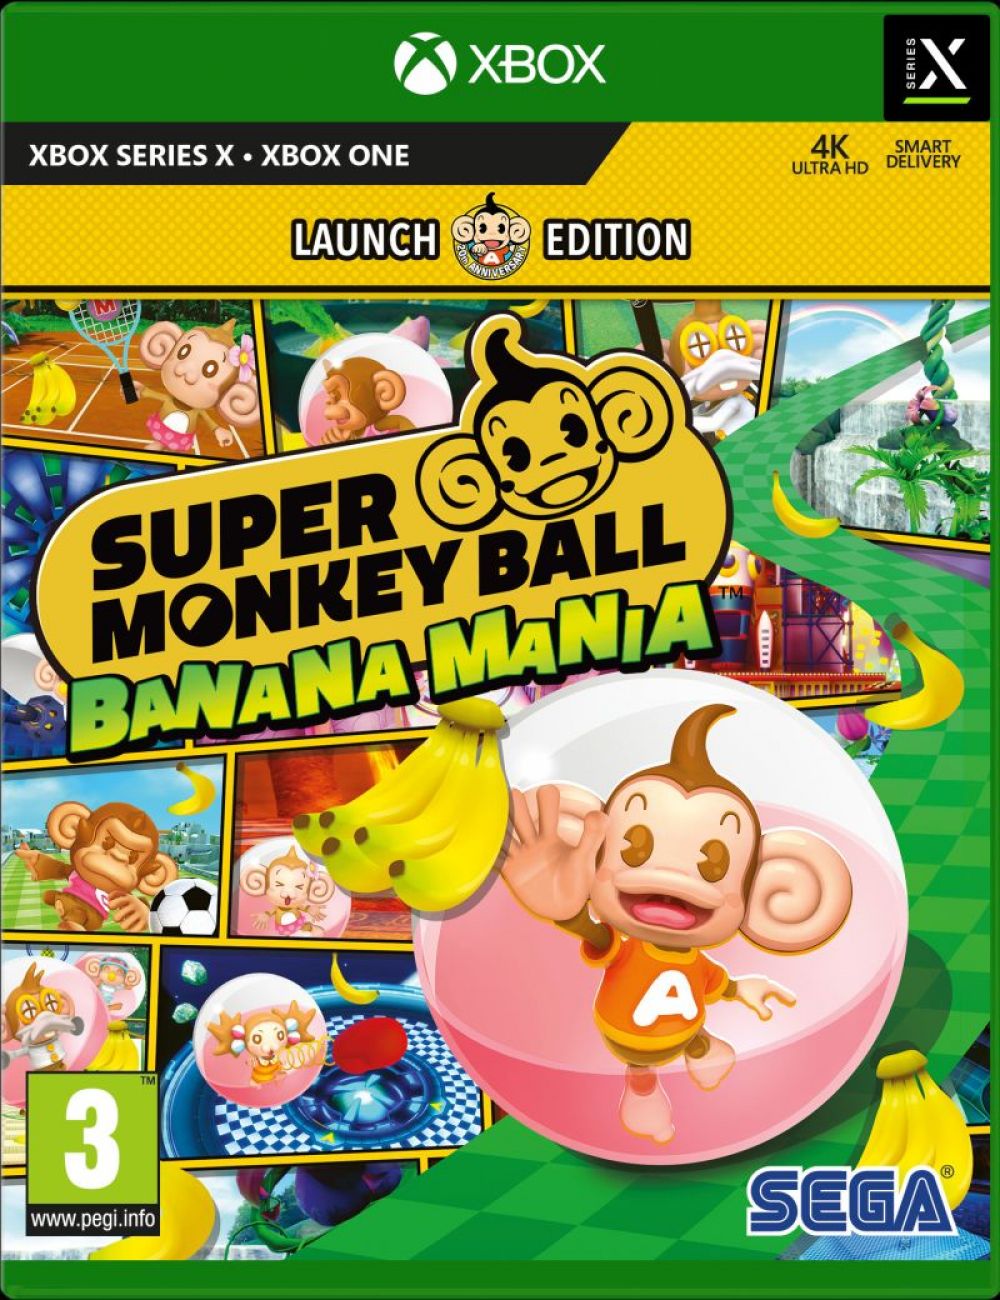 Super monkey ball banana mania launch ediiton - xbox series x